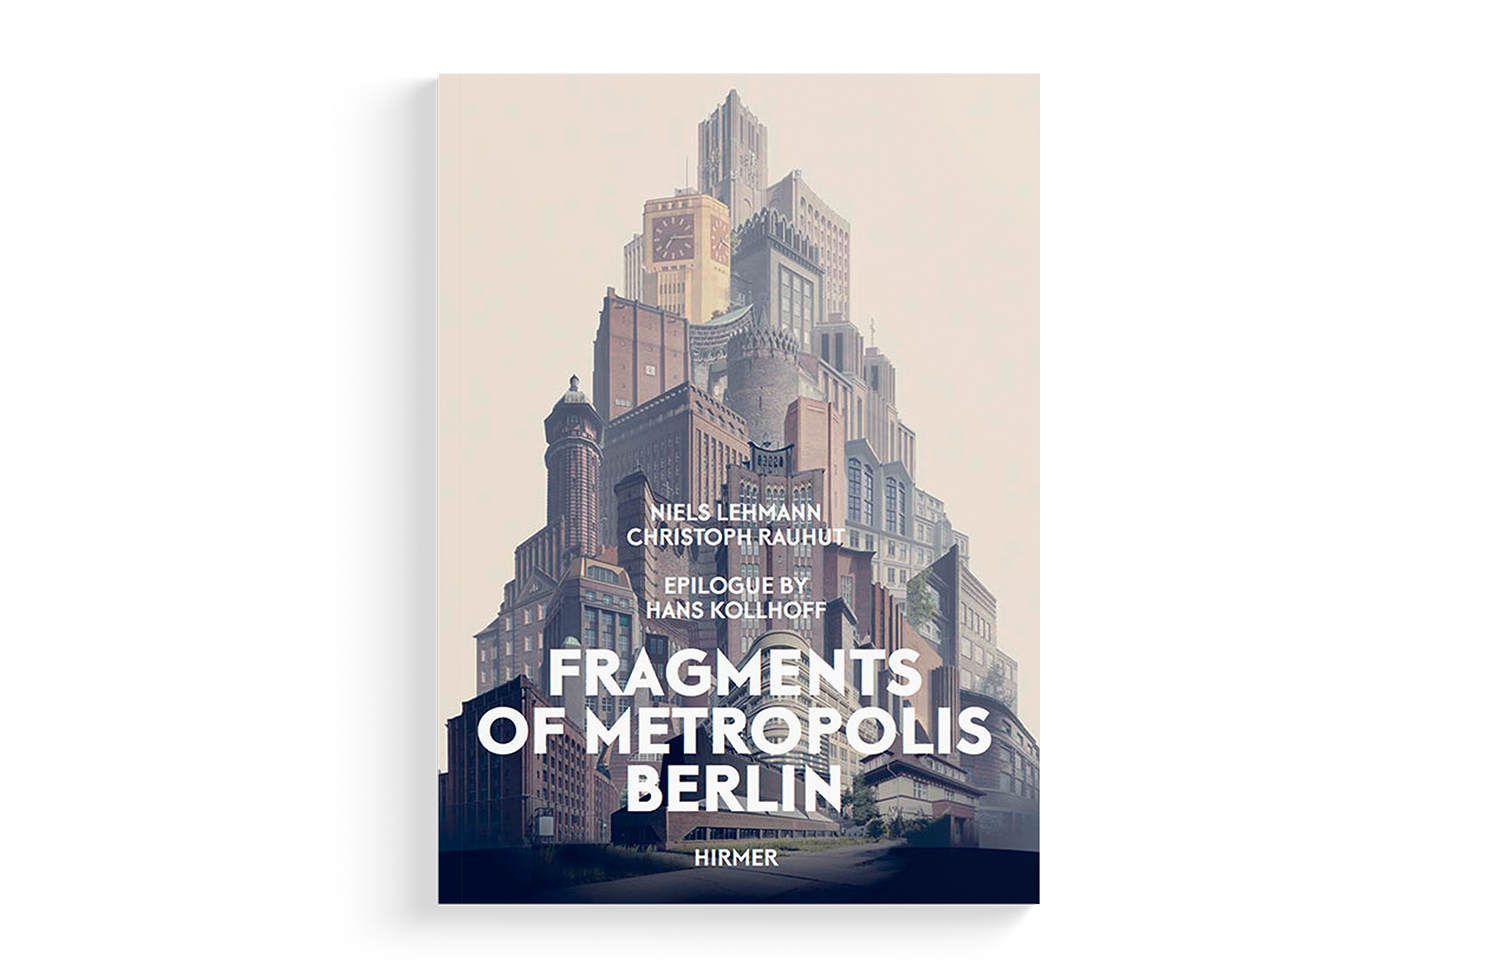 Fragments of metropolis Berlin